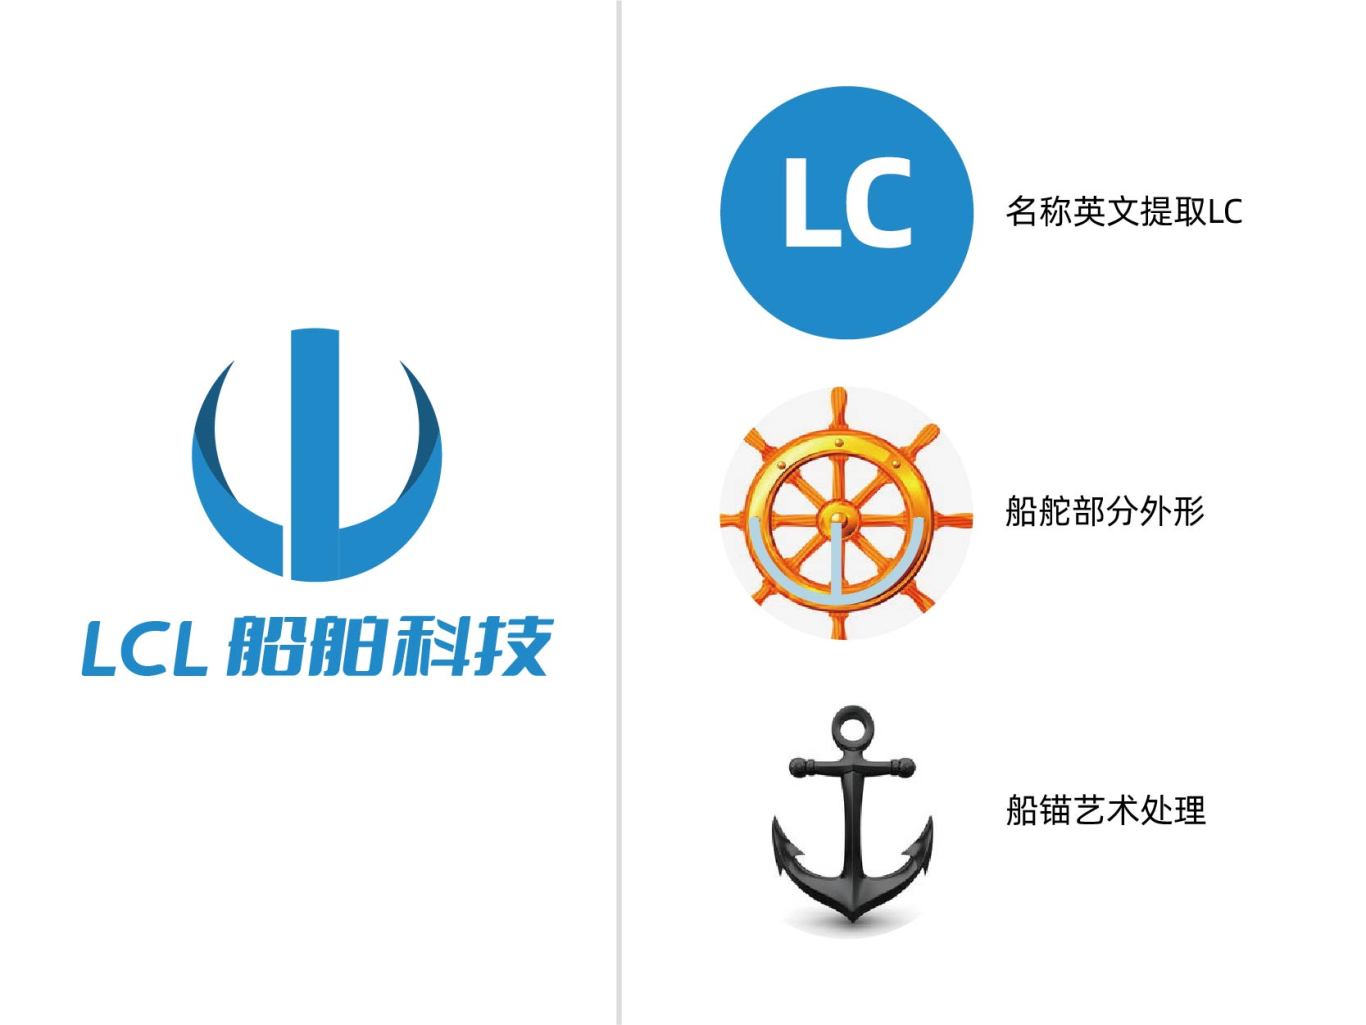  LCL 船舶科技图1